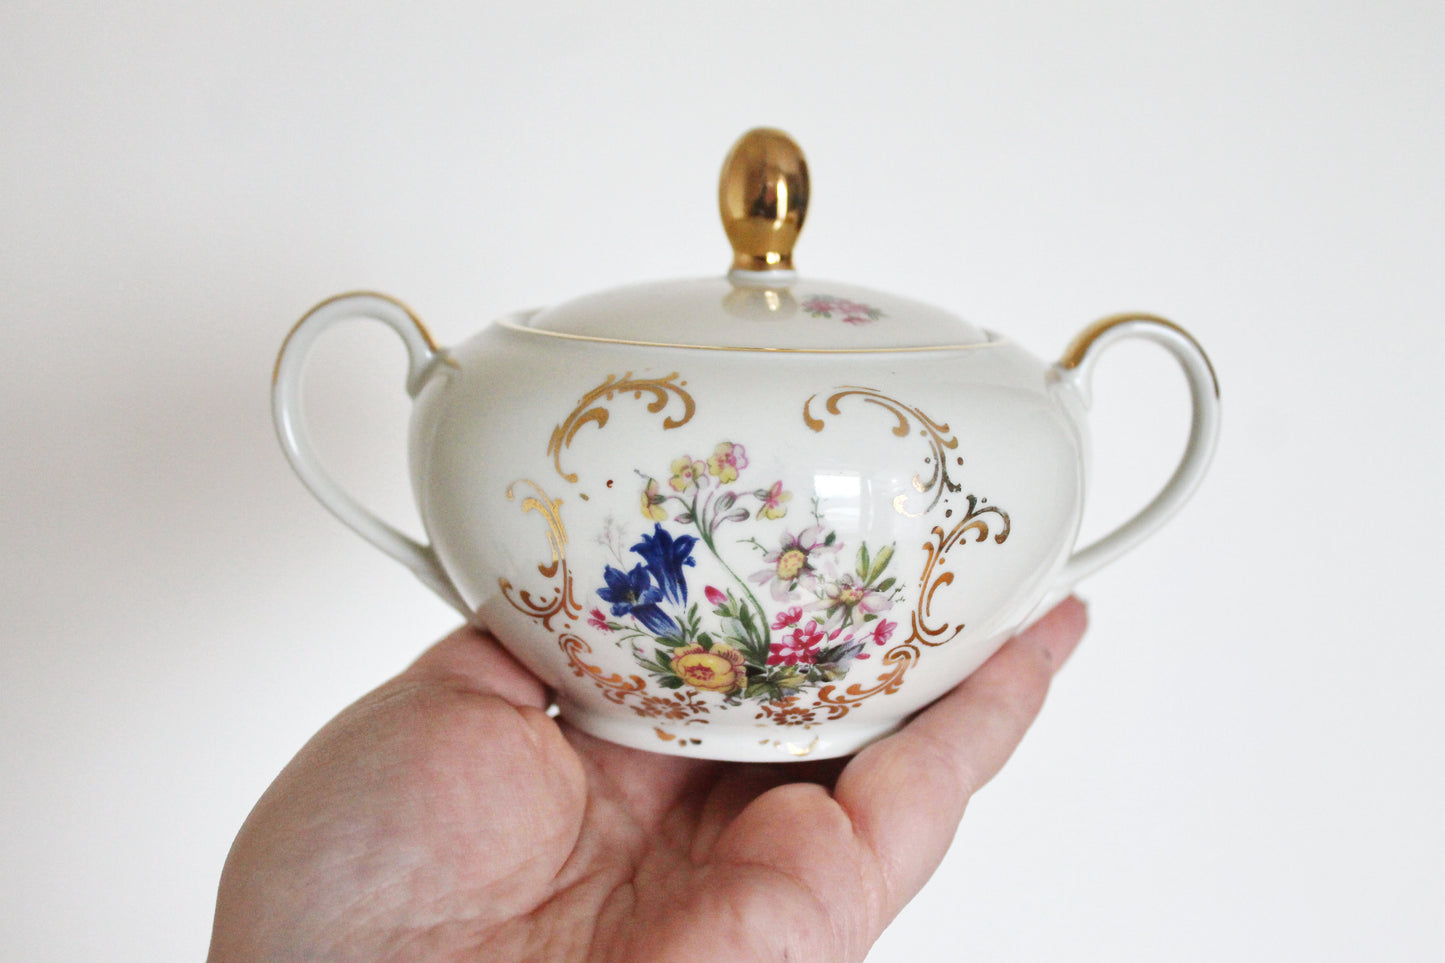 Vintage Germany ceramic sugar bowl with beautiful floral ornament - porcelain sugar bowl - 1970s